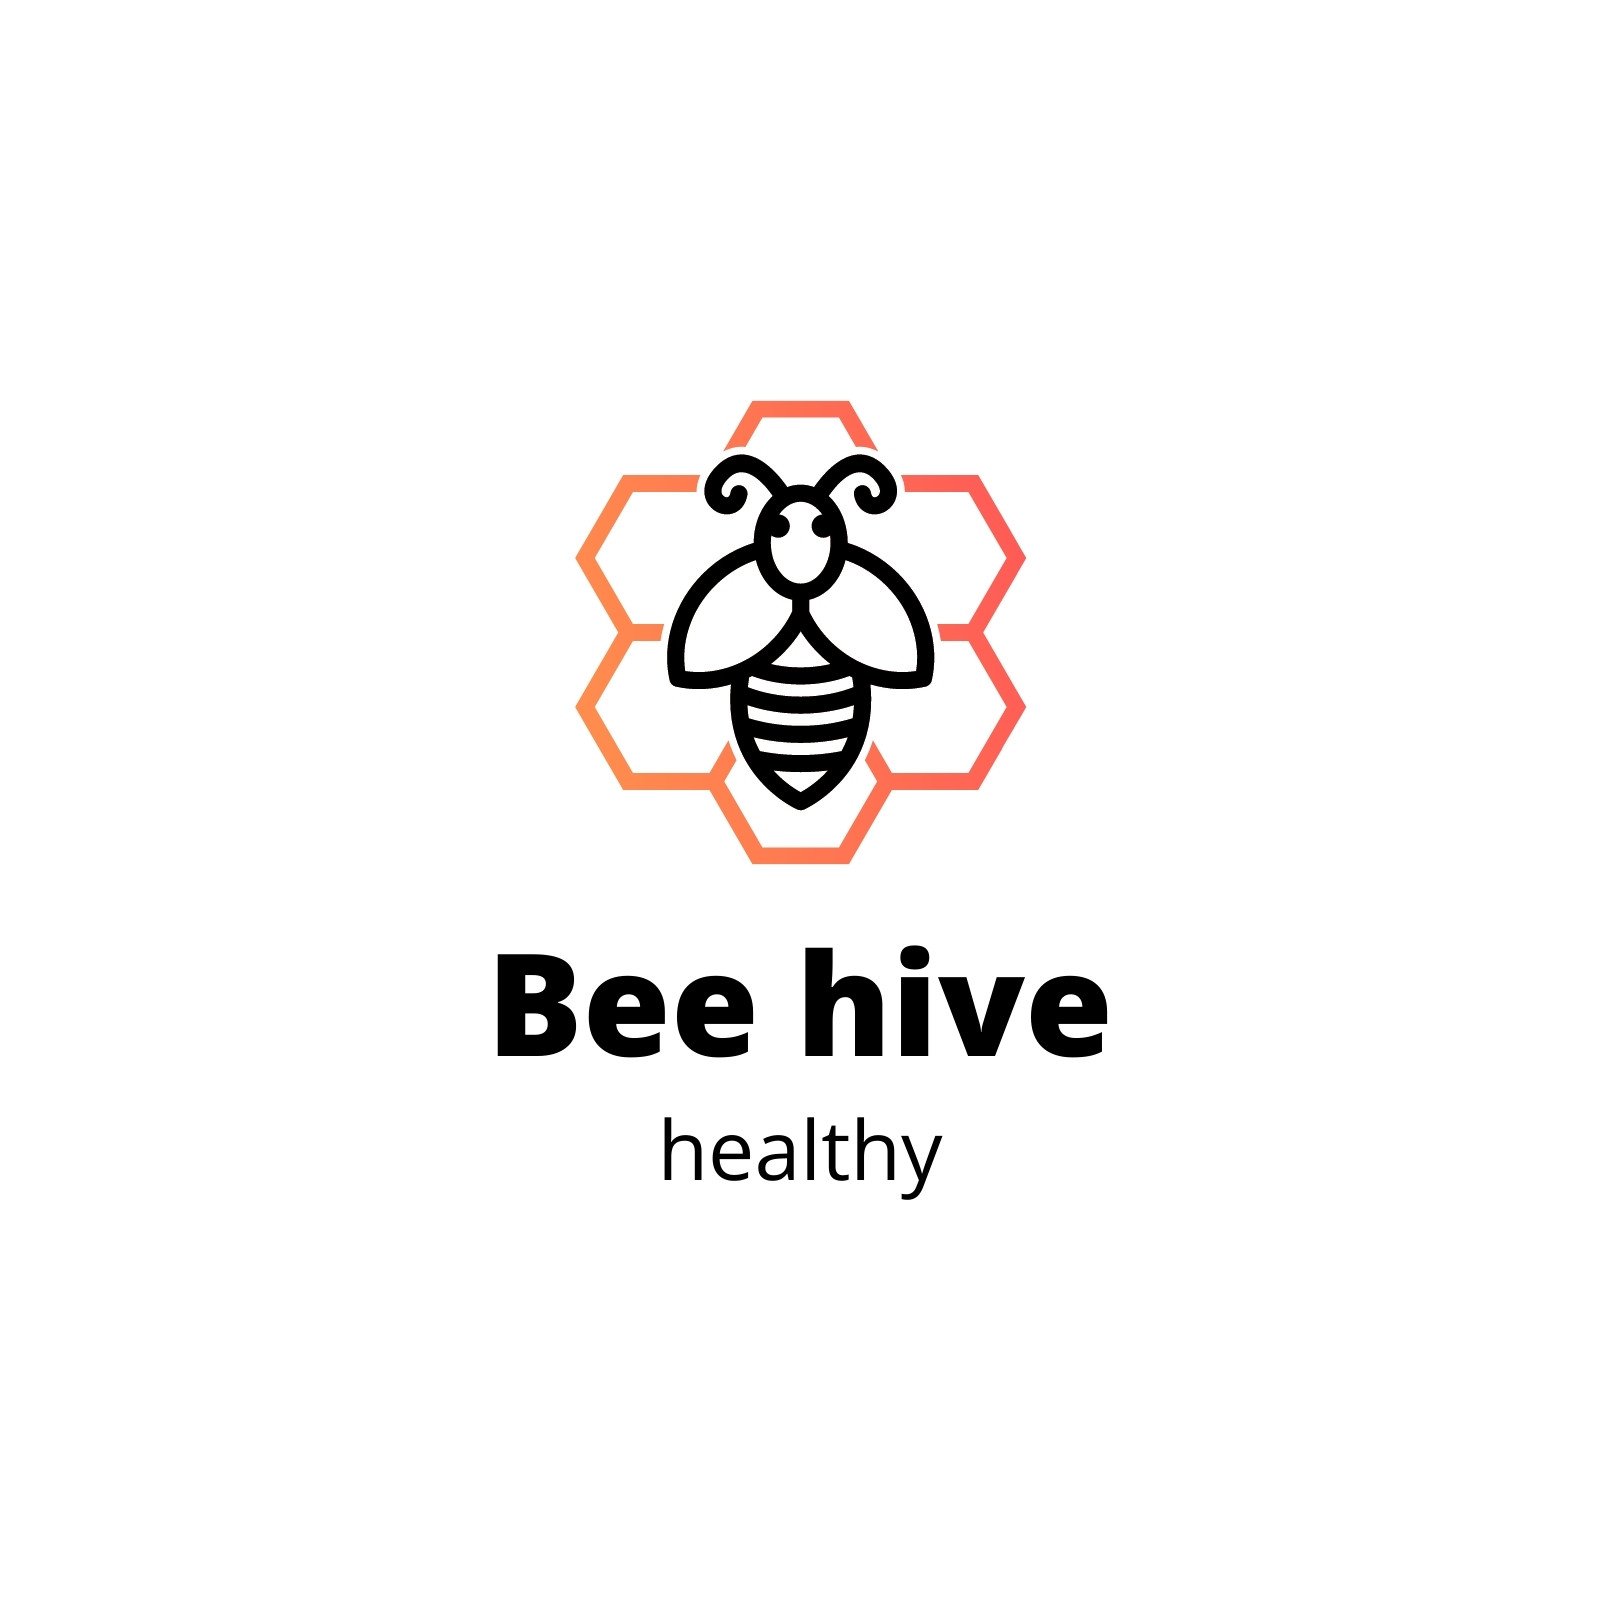 hive logo inspiration